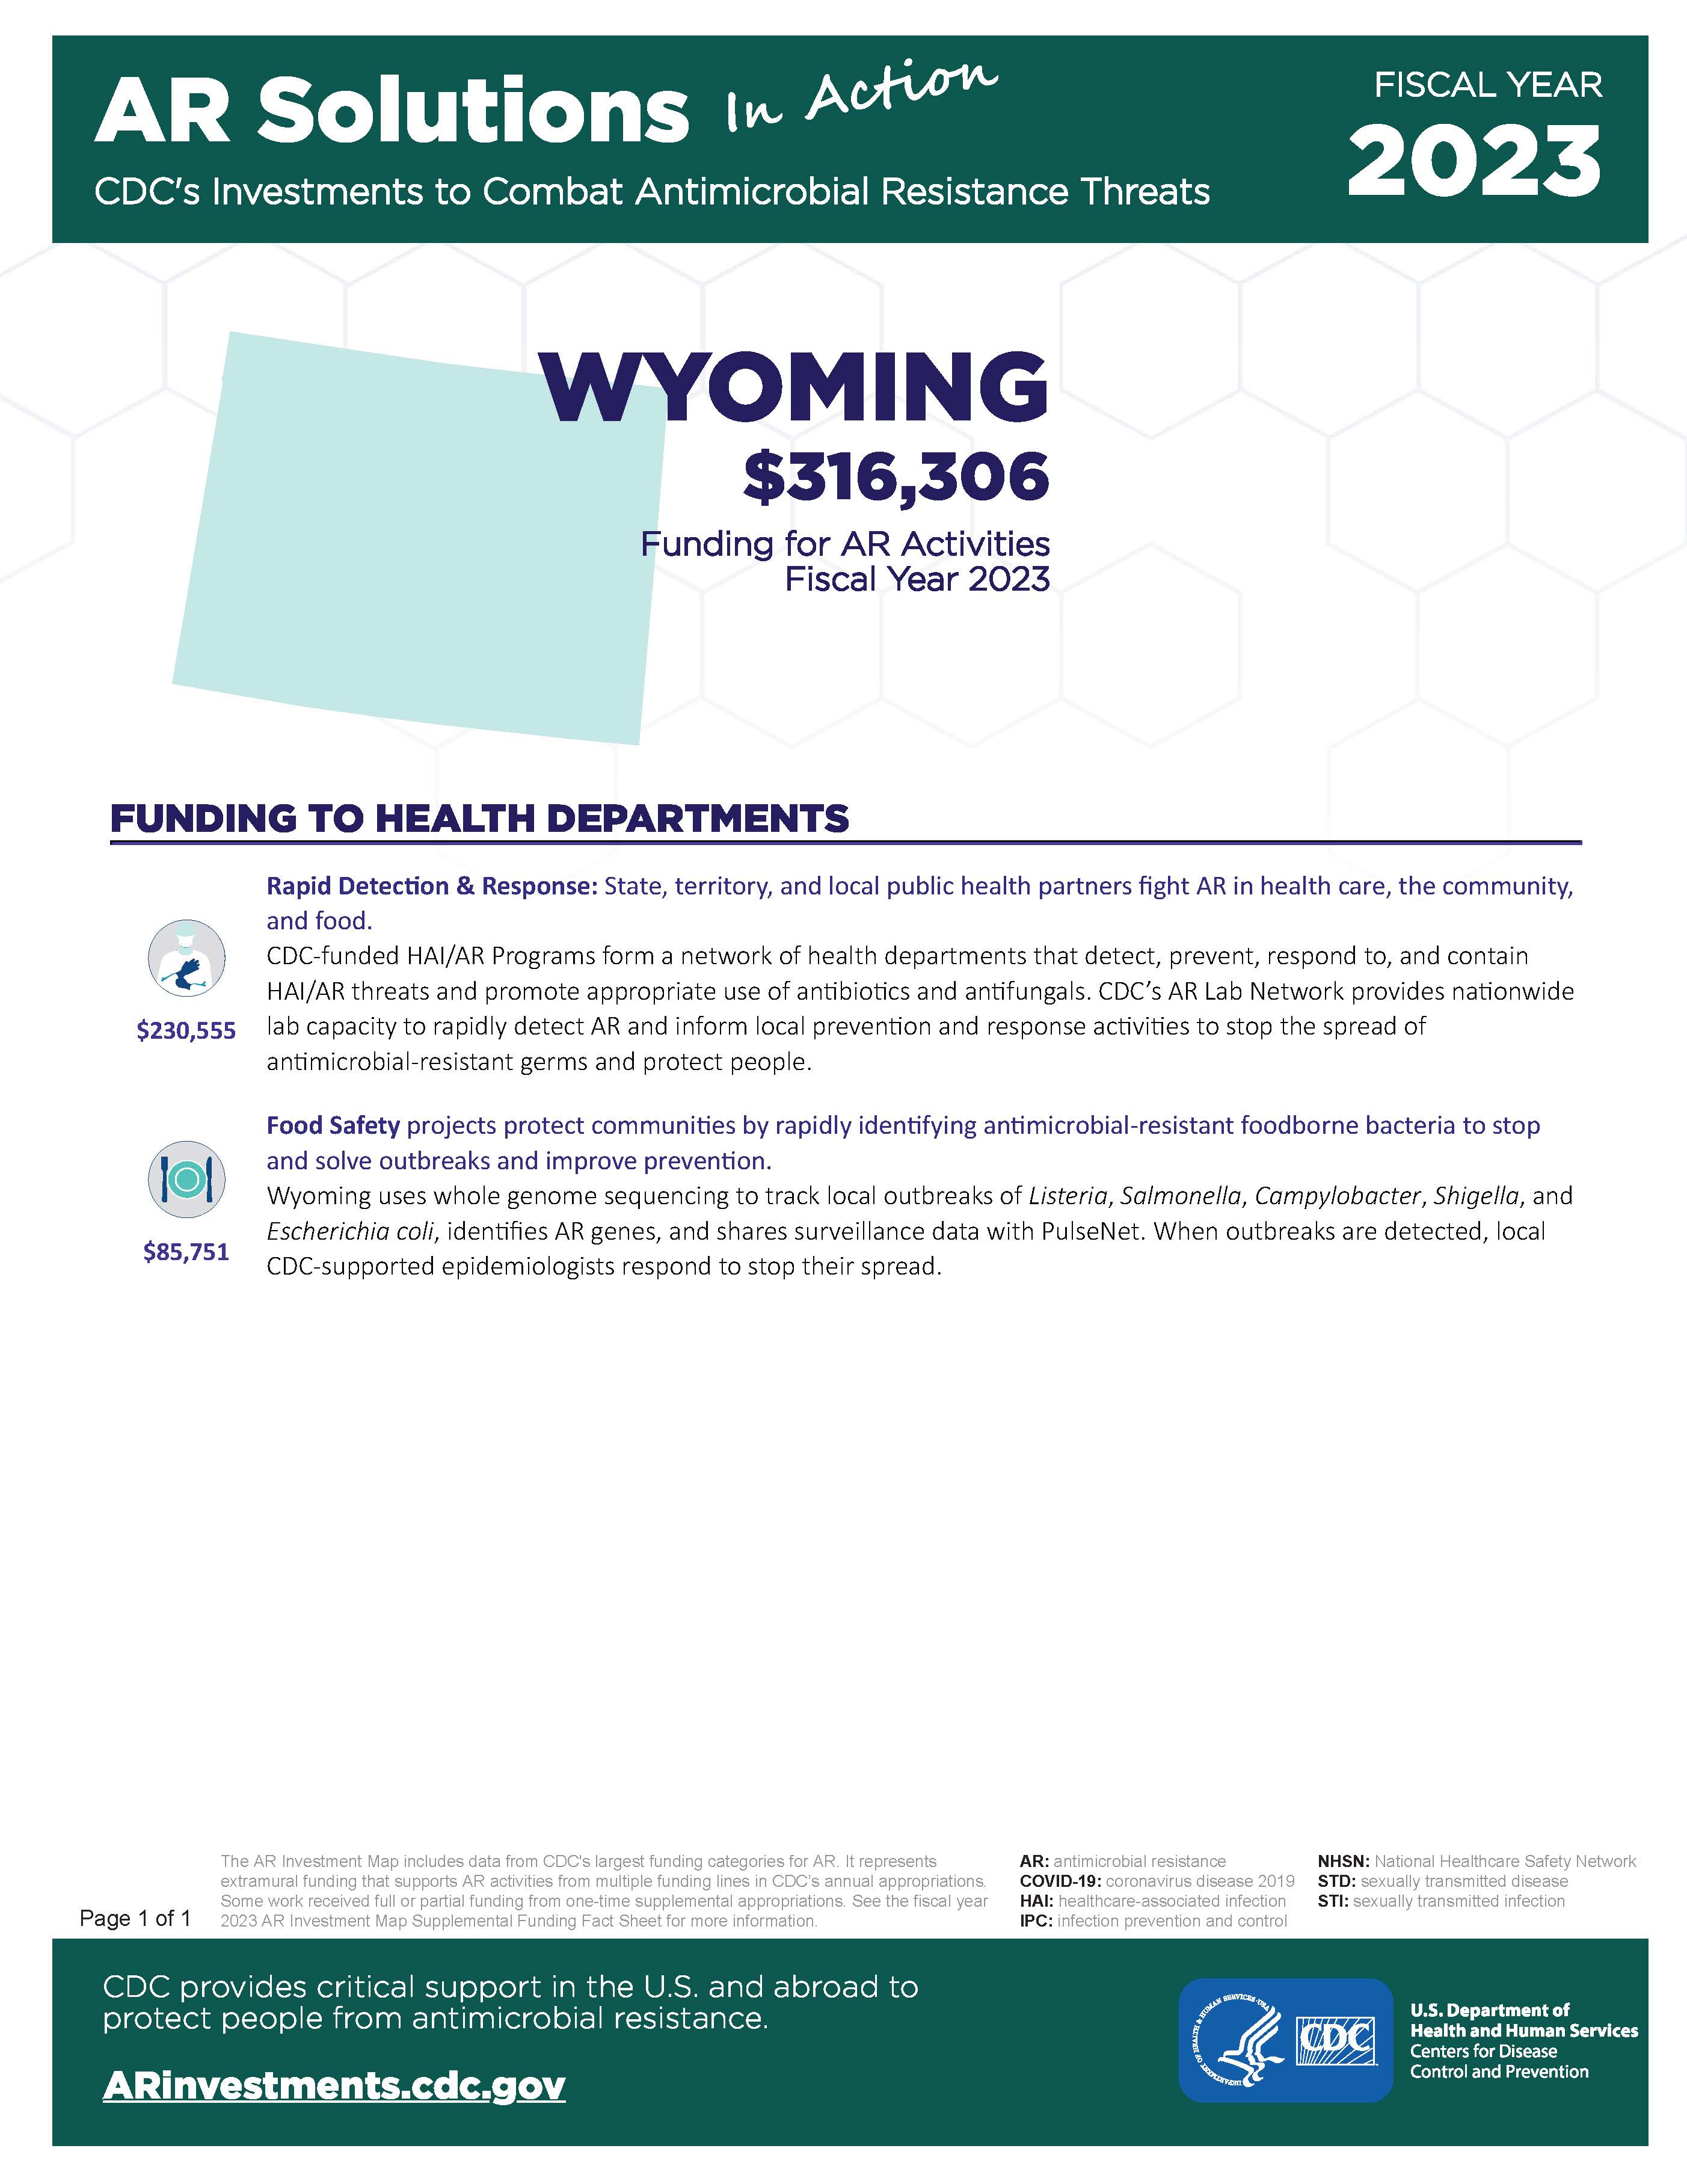 View Factsheet for Wyoming